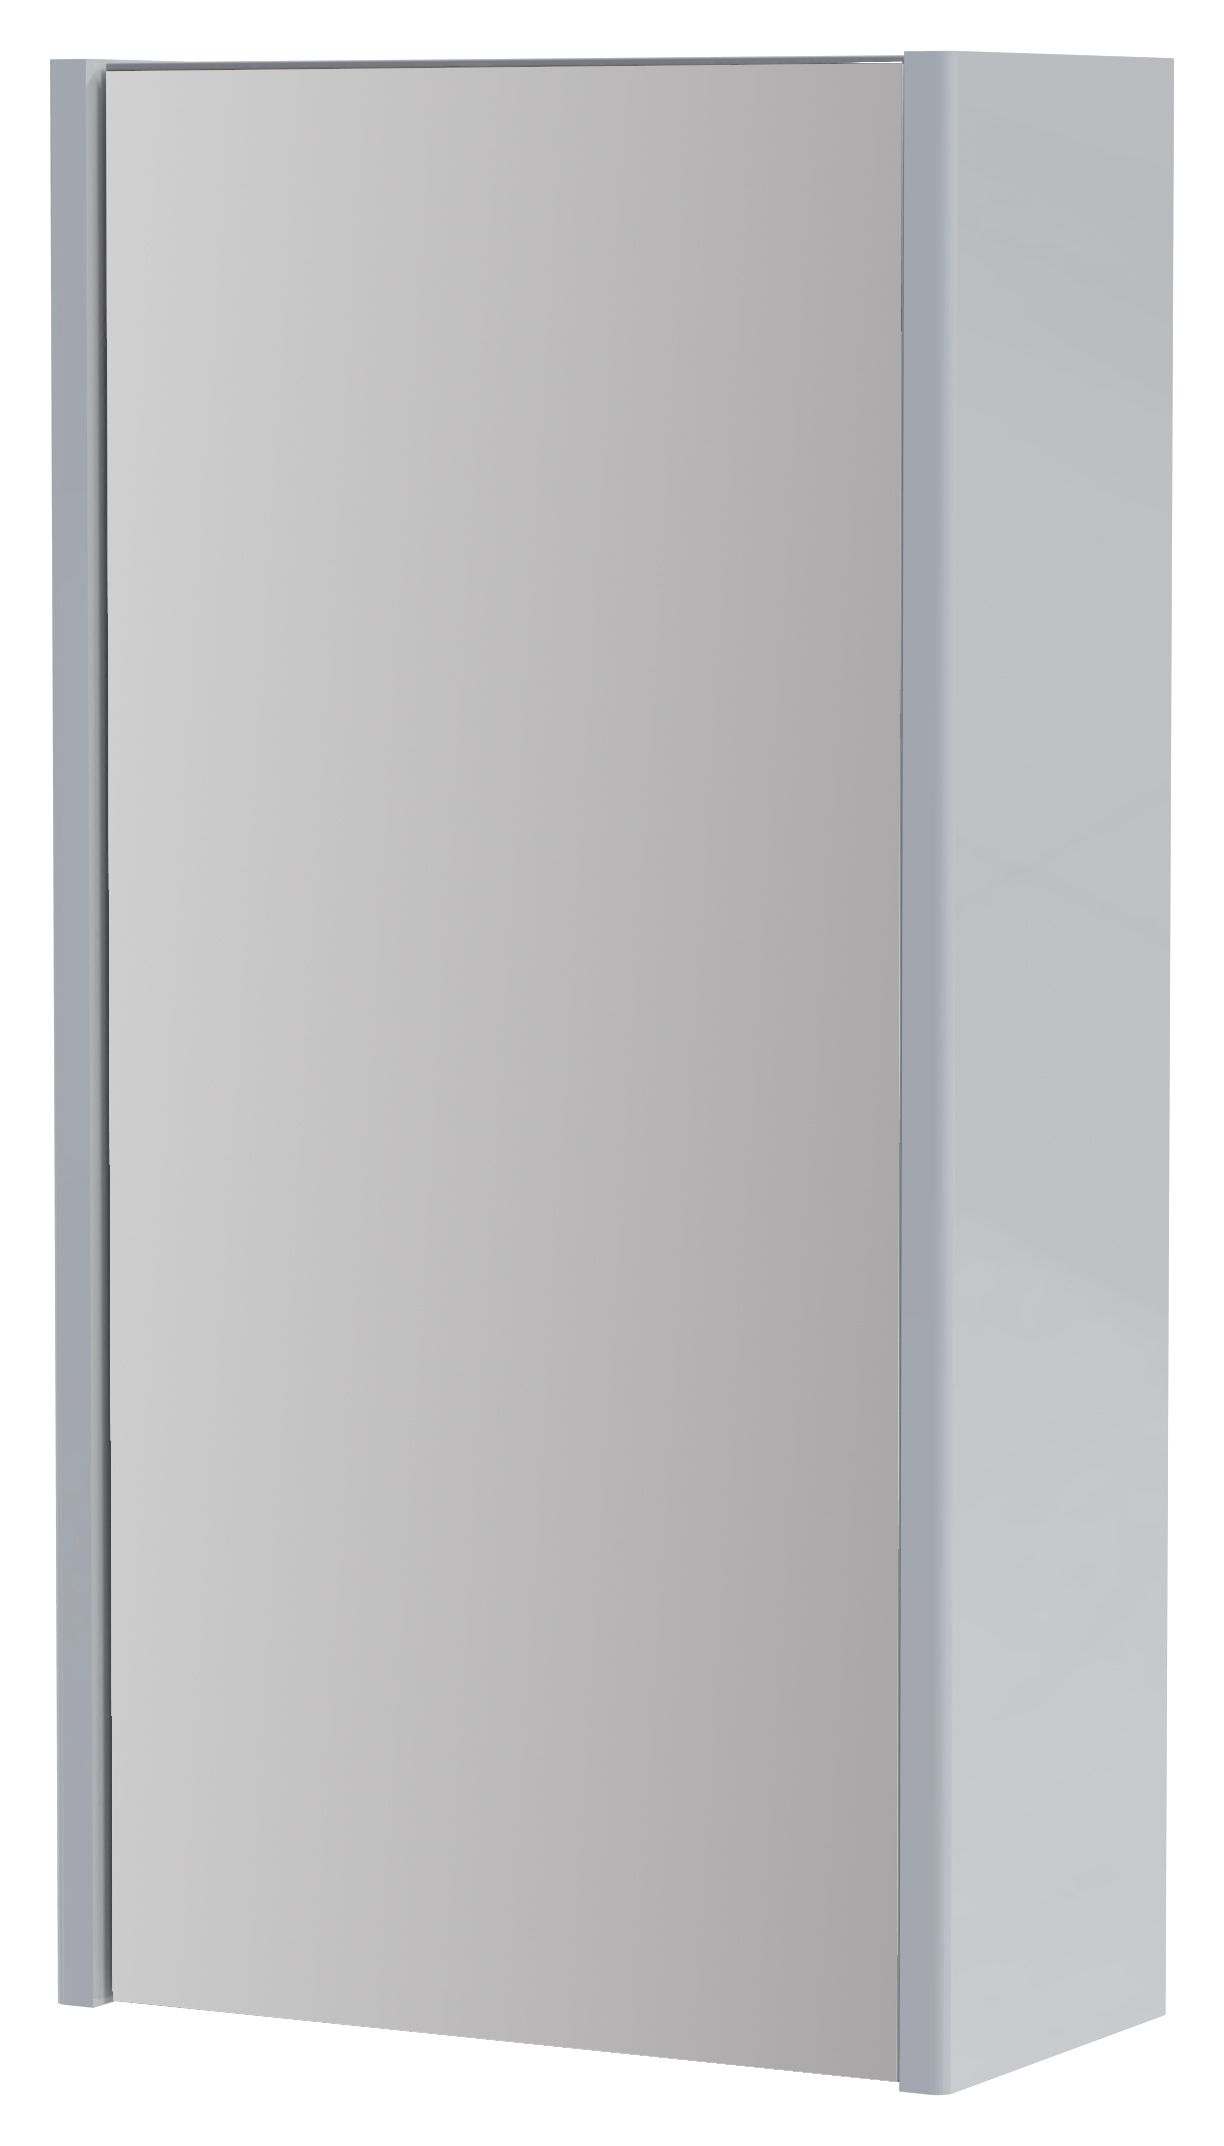 Image of Wickes Semi-Frameless White Single Mirror Bathroom Cabinet - 600 x 310mm